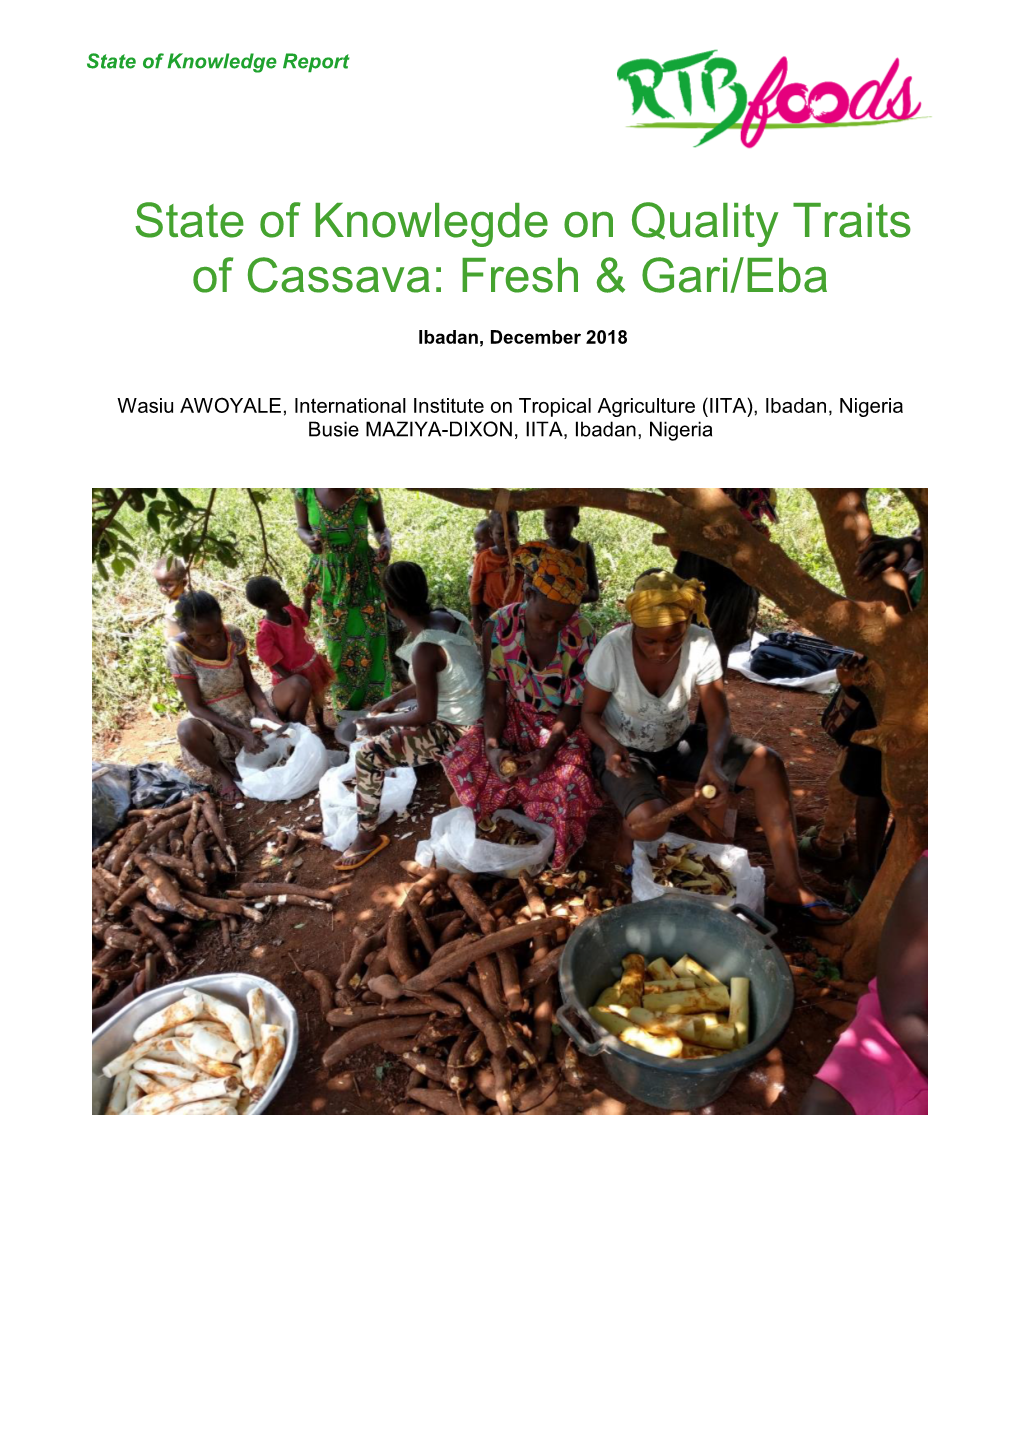 State of Knowlegde on Quality Traits of Cassava: Fresh & Gari/Eba